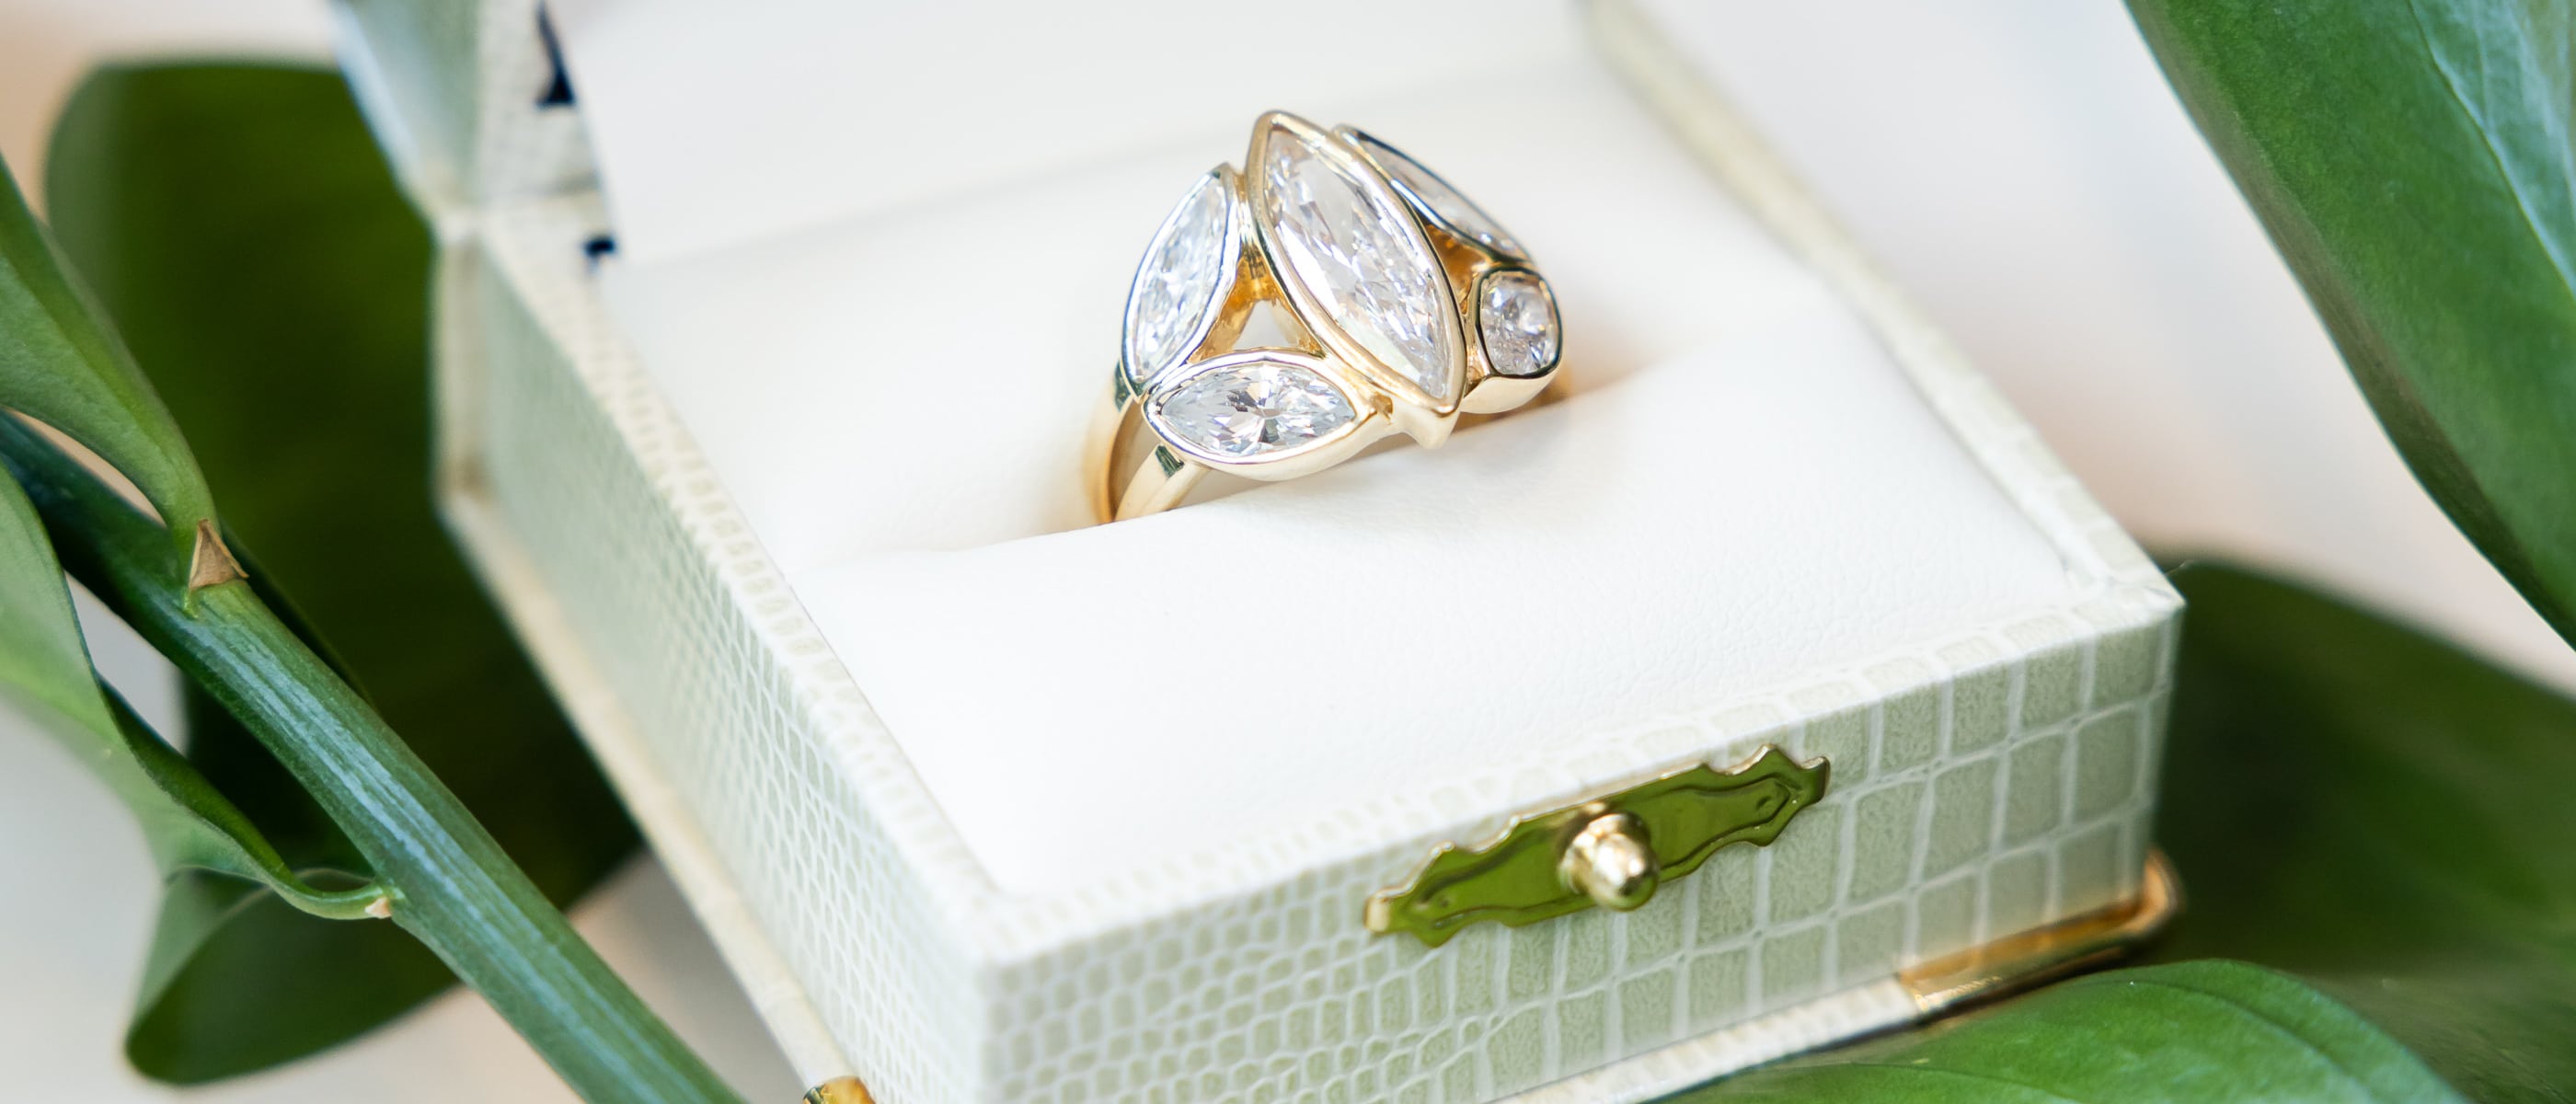 Philip Portsche custom diamond engagment ring for his wife, Megan Portsche